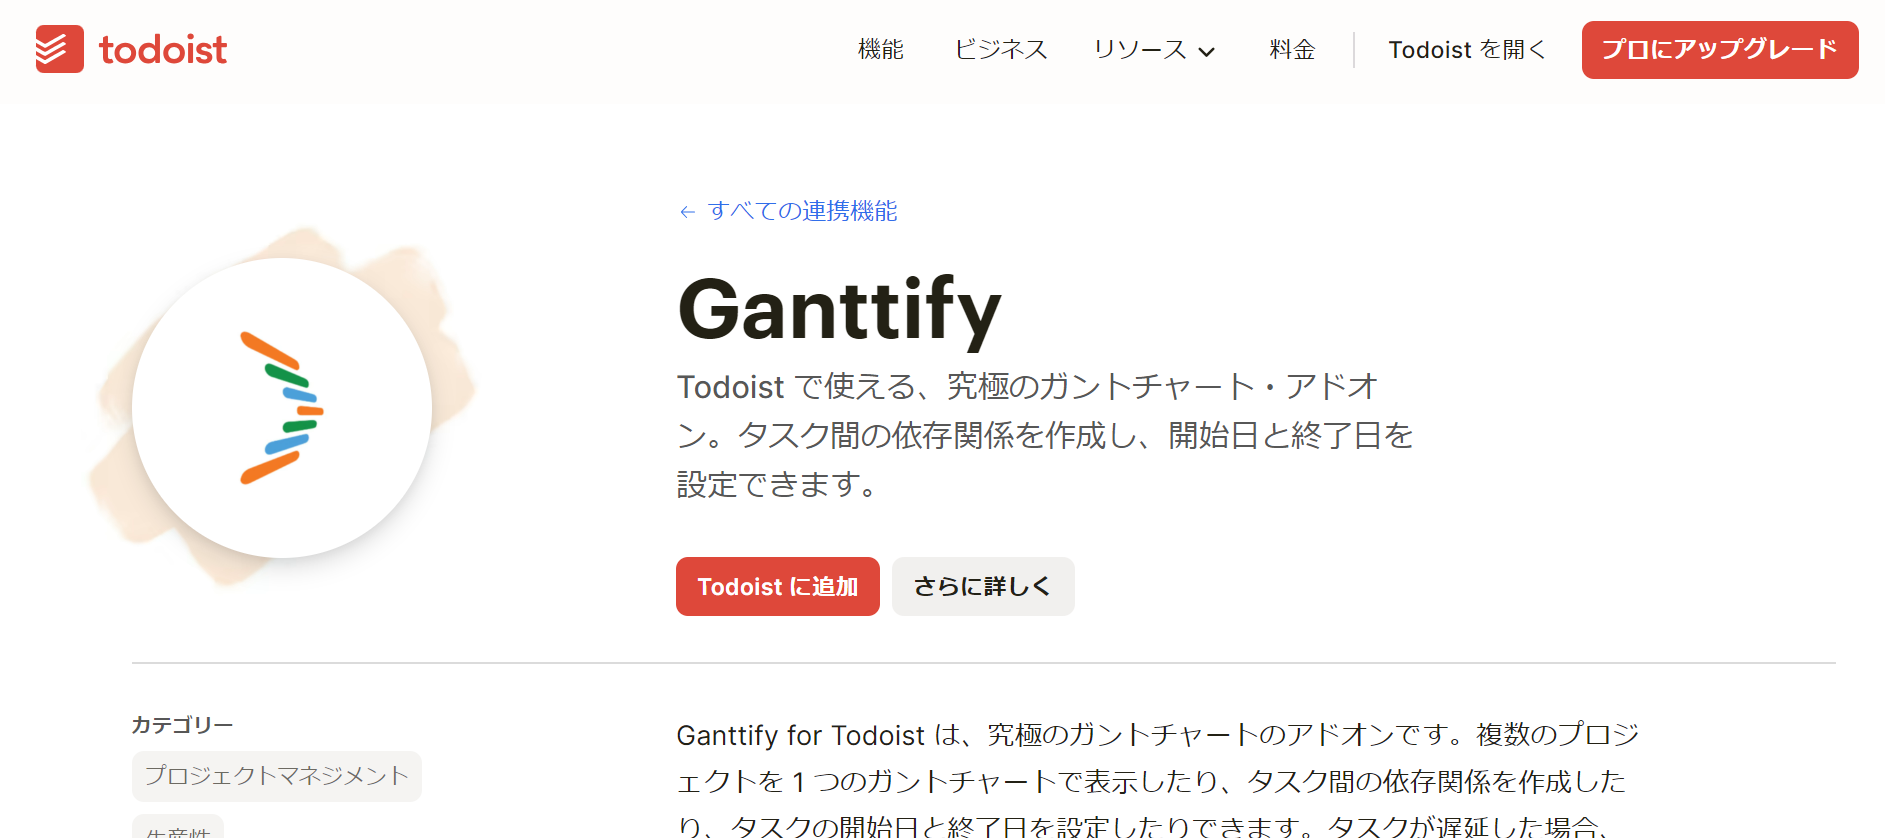 TodoistのGanttifyを紹介する画面